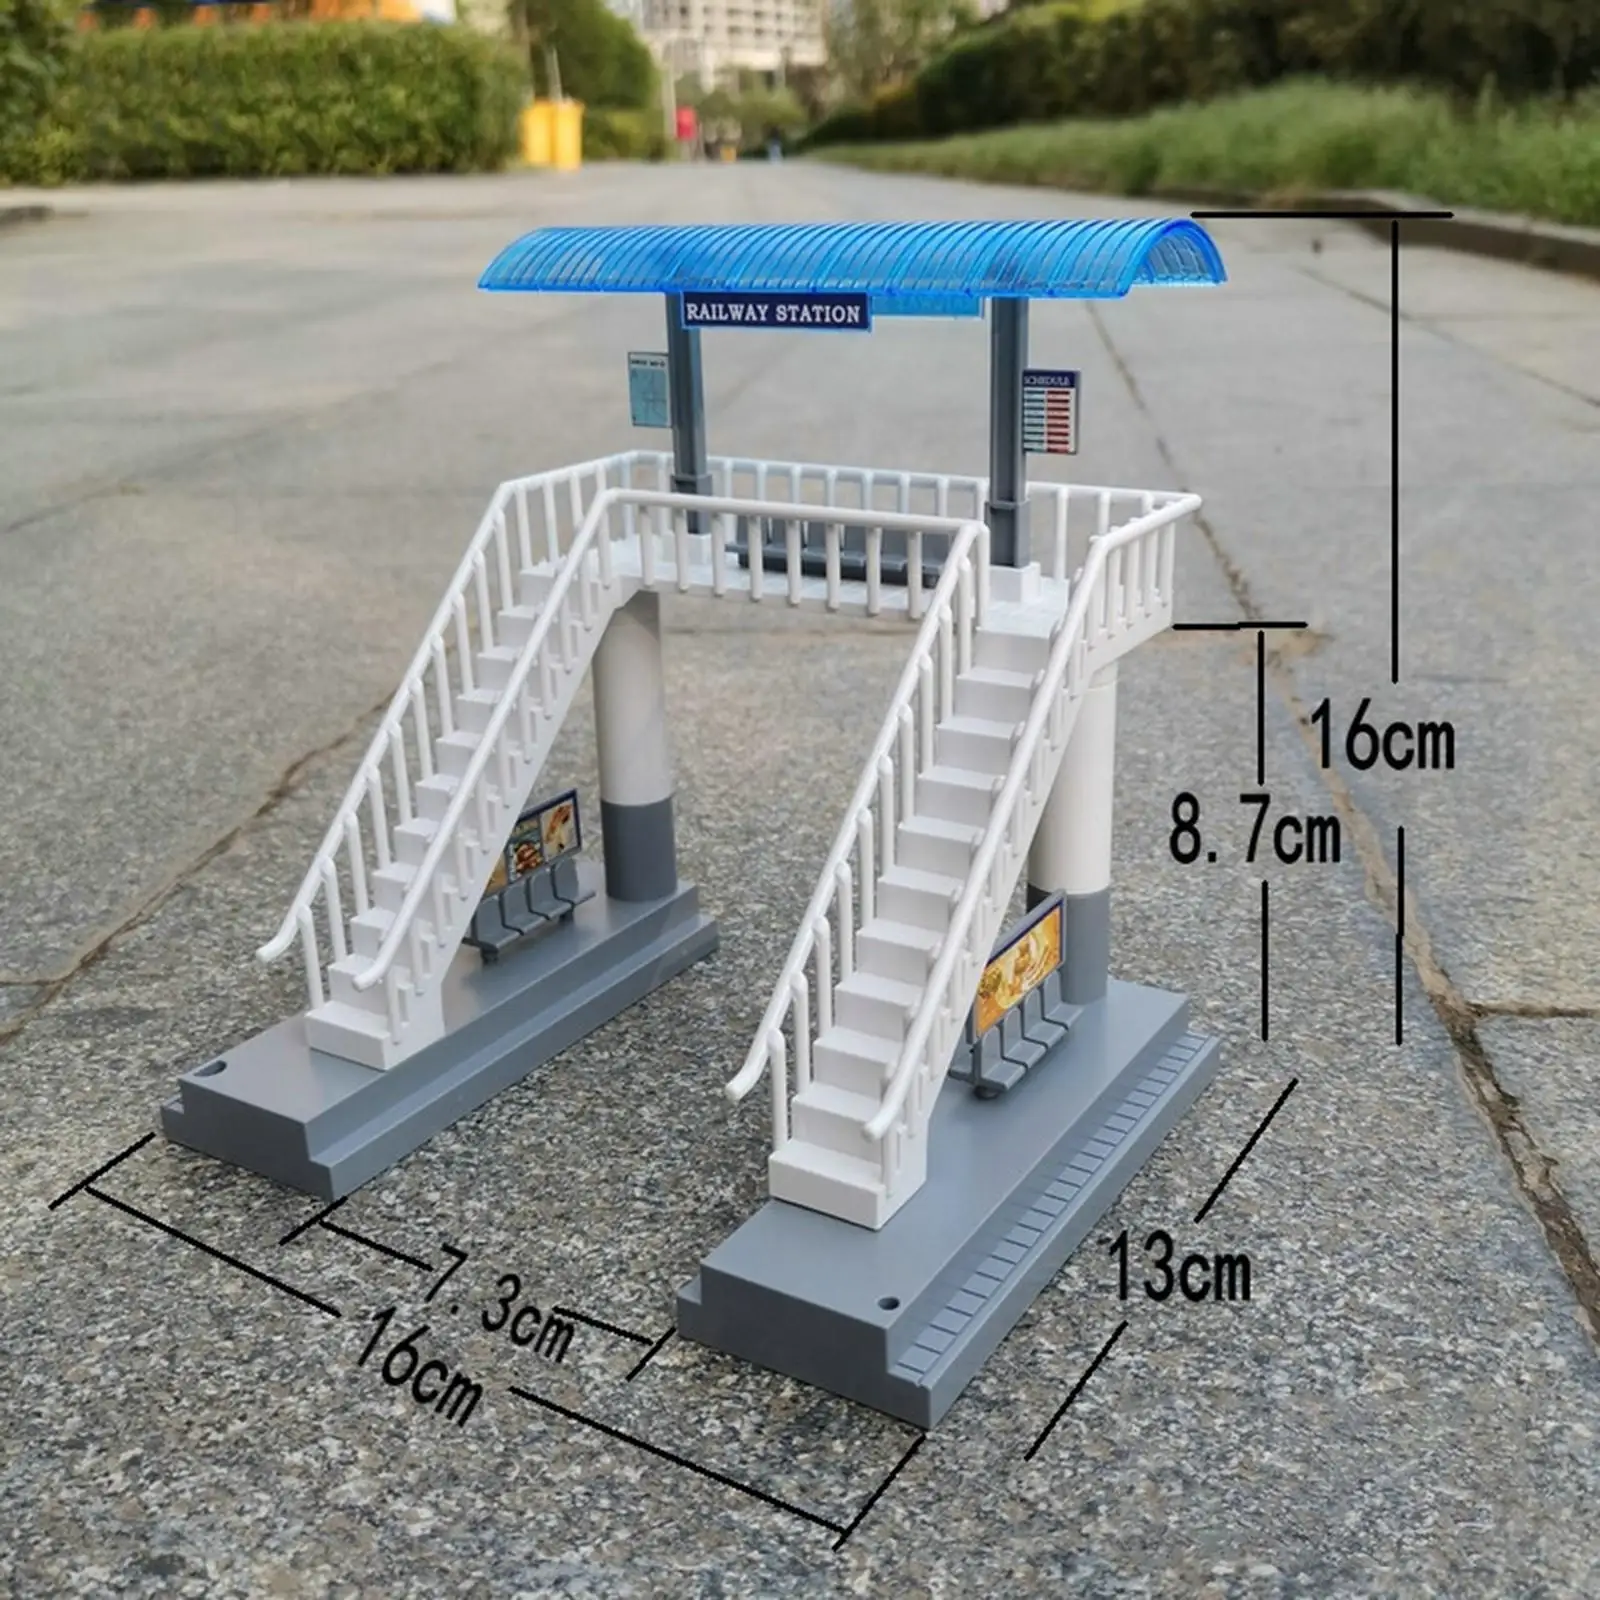 Train Station Station Platform Building Model for Micro Landscape Railway Railroad